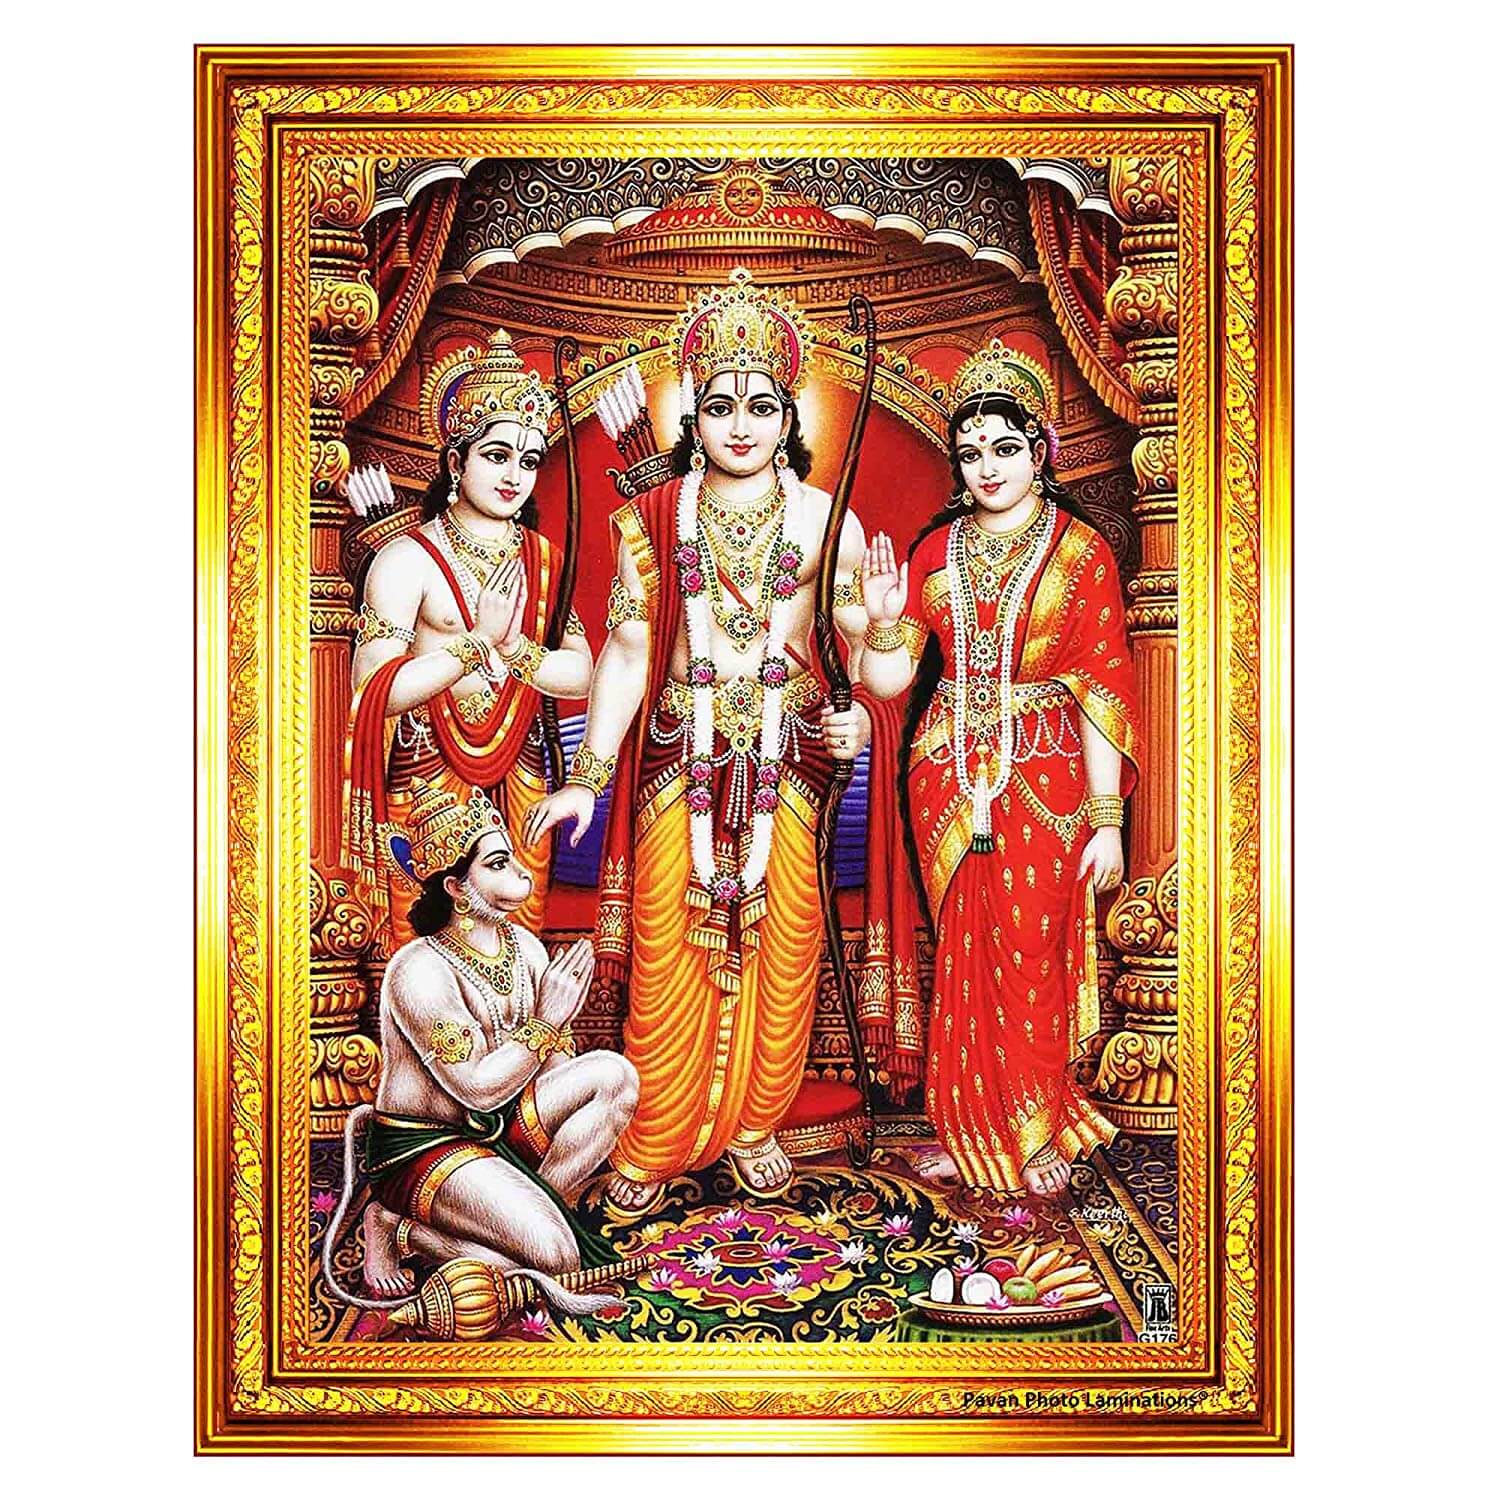 Lord Shri Ram Sita Laxman Hanuman Darbar Parivar Family Photo Frame for Home Mandir, Wall Decoration, Gift Item (Glossy, 10 x 12 in) Mangal Fashions | Indian Home Decor and Craft